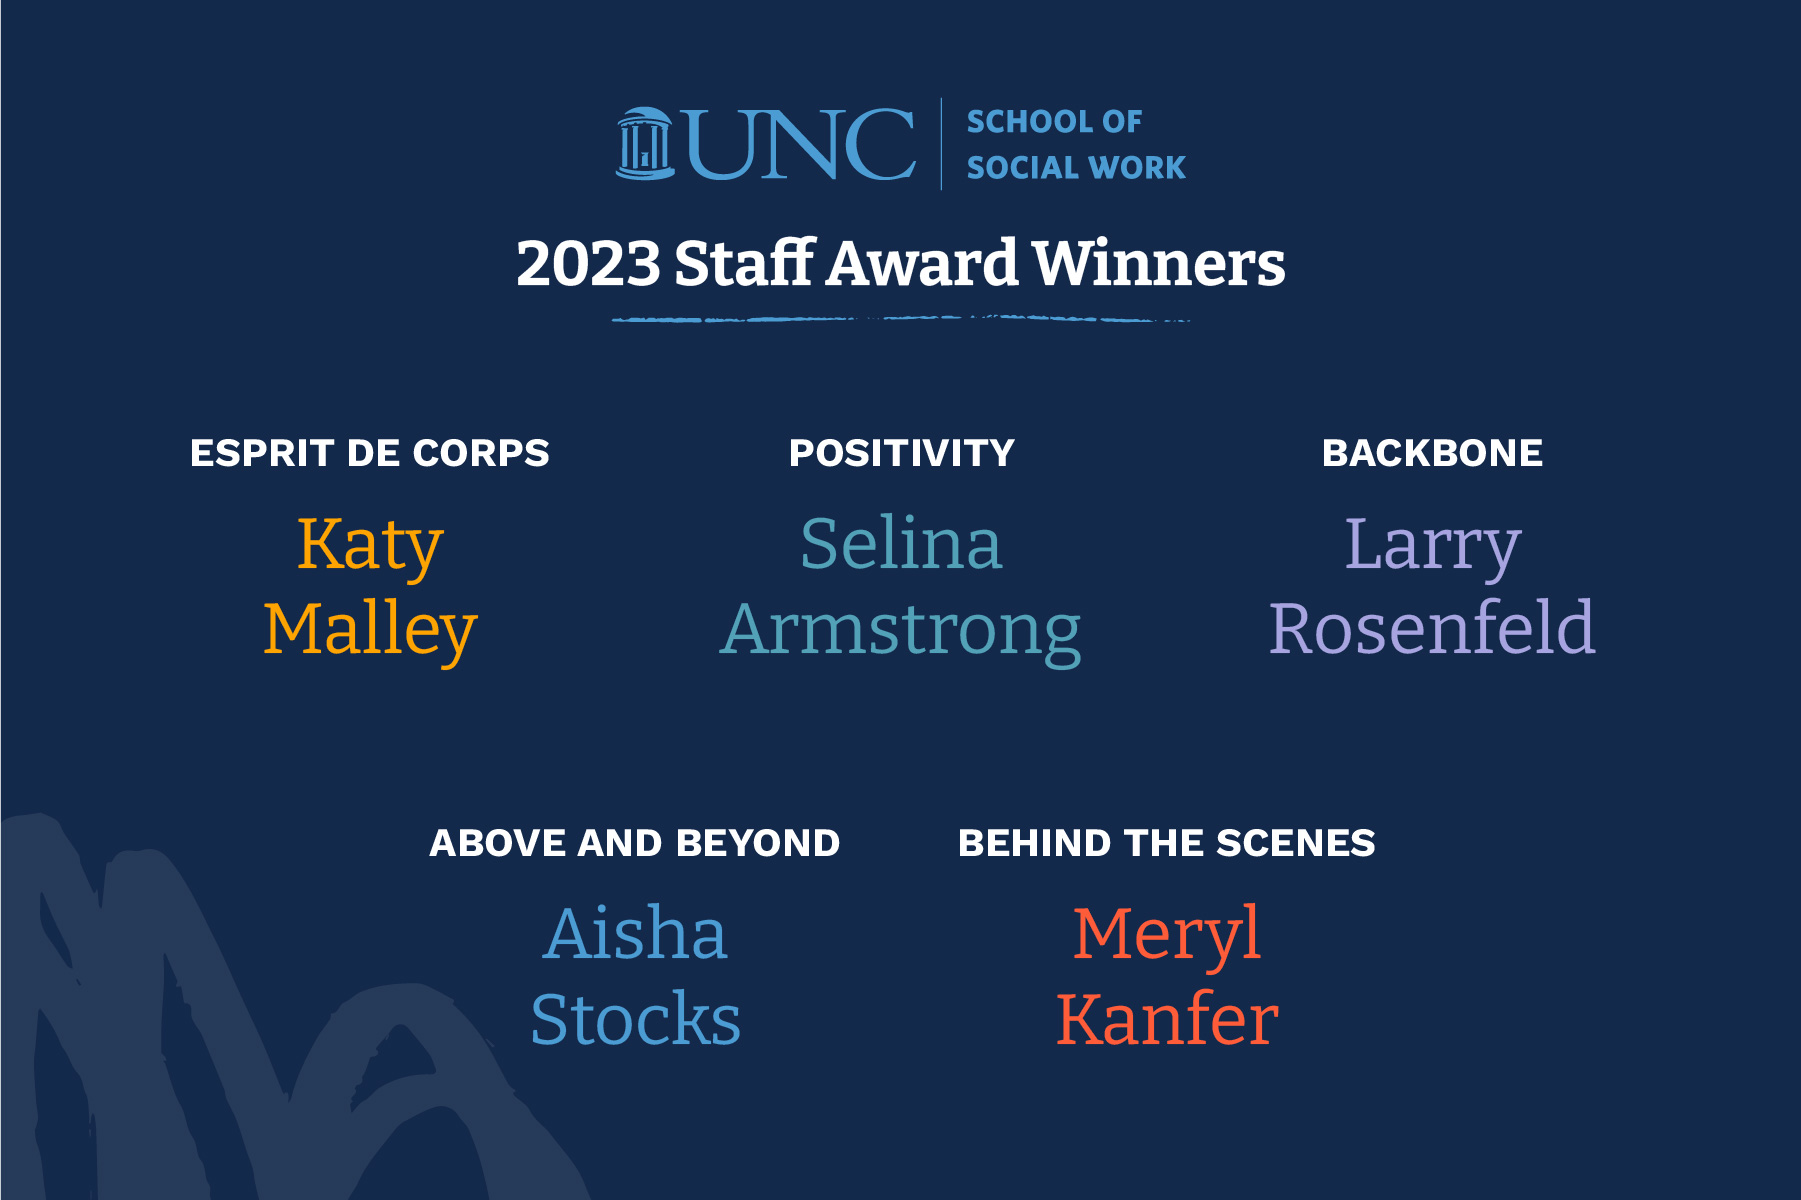 2023 Staff Impact Award Winners include Katy Malley, Selina Armstrong, Larry Rosenfeld, Aisha Stocks, and Meryl Kanfer